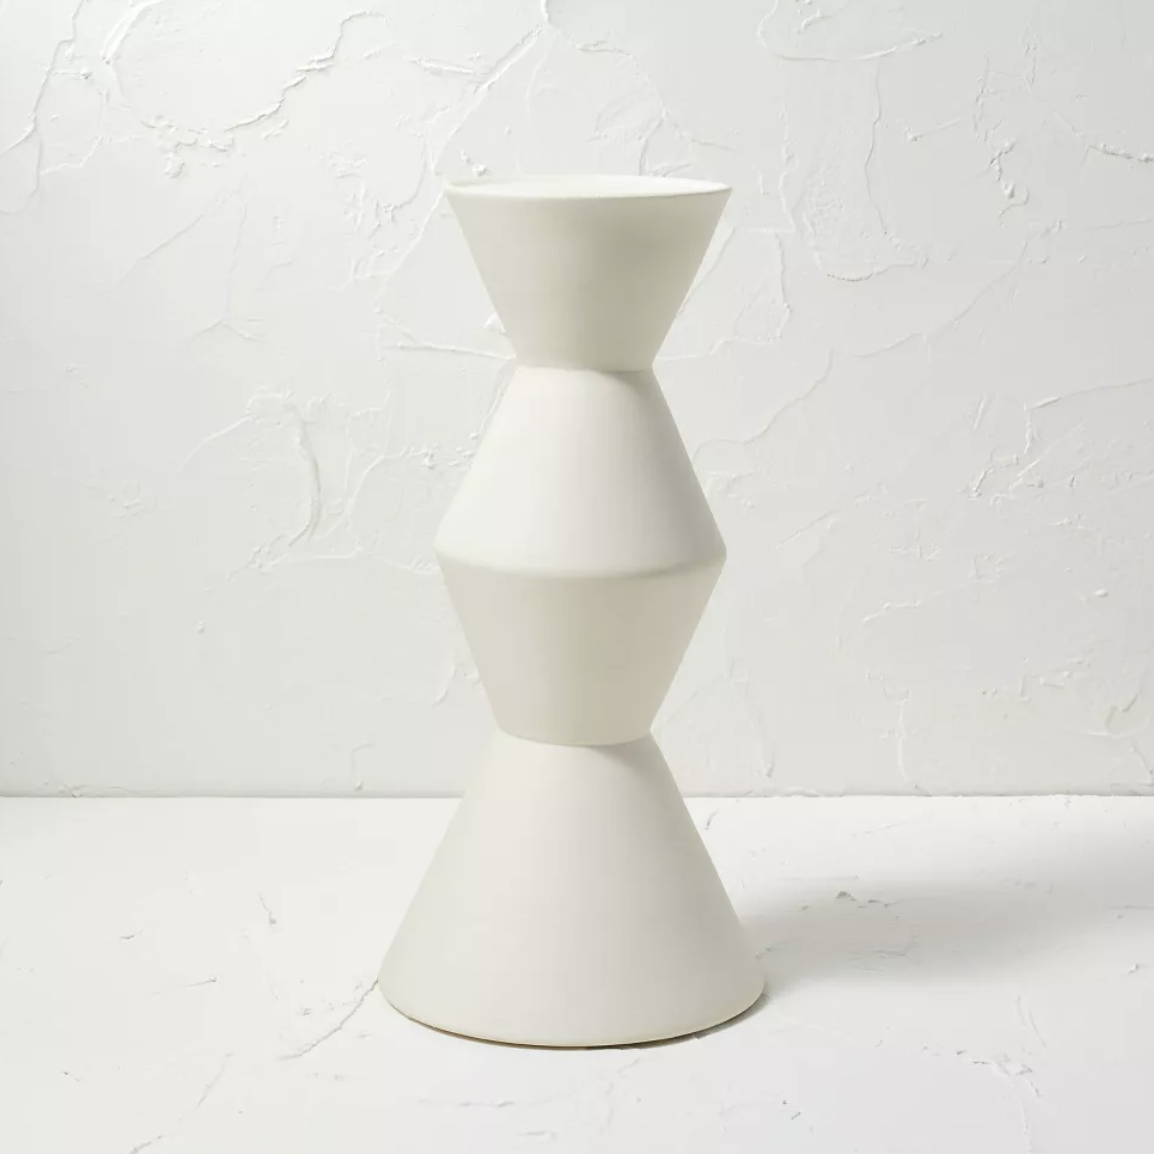 Target - $30 - Ceramic Plant Pedestal